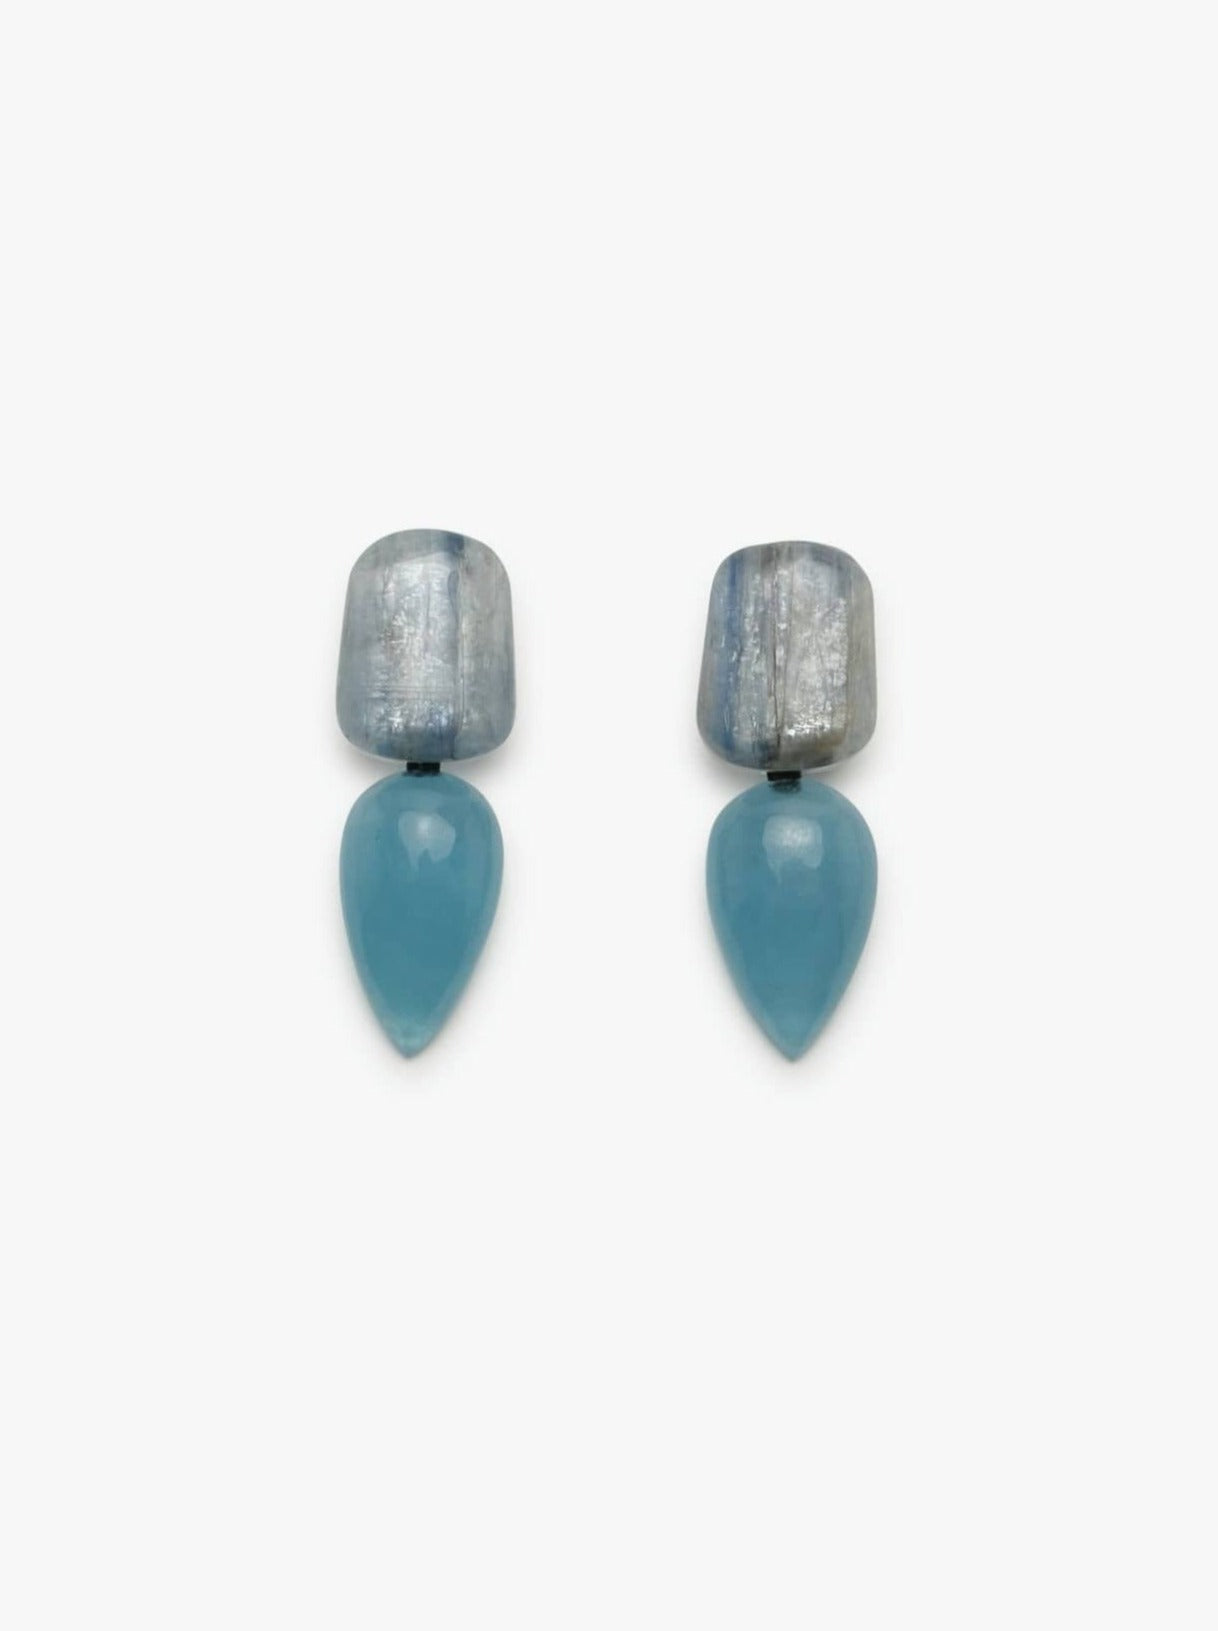 Earring: aquamarine, greencast acrylic, kyanite